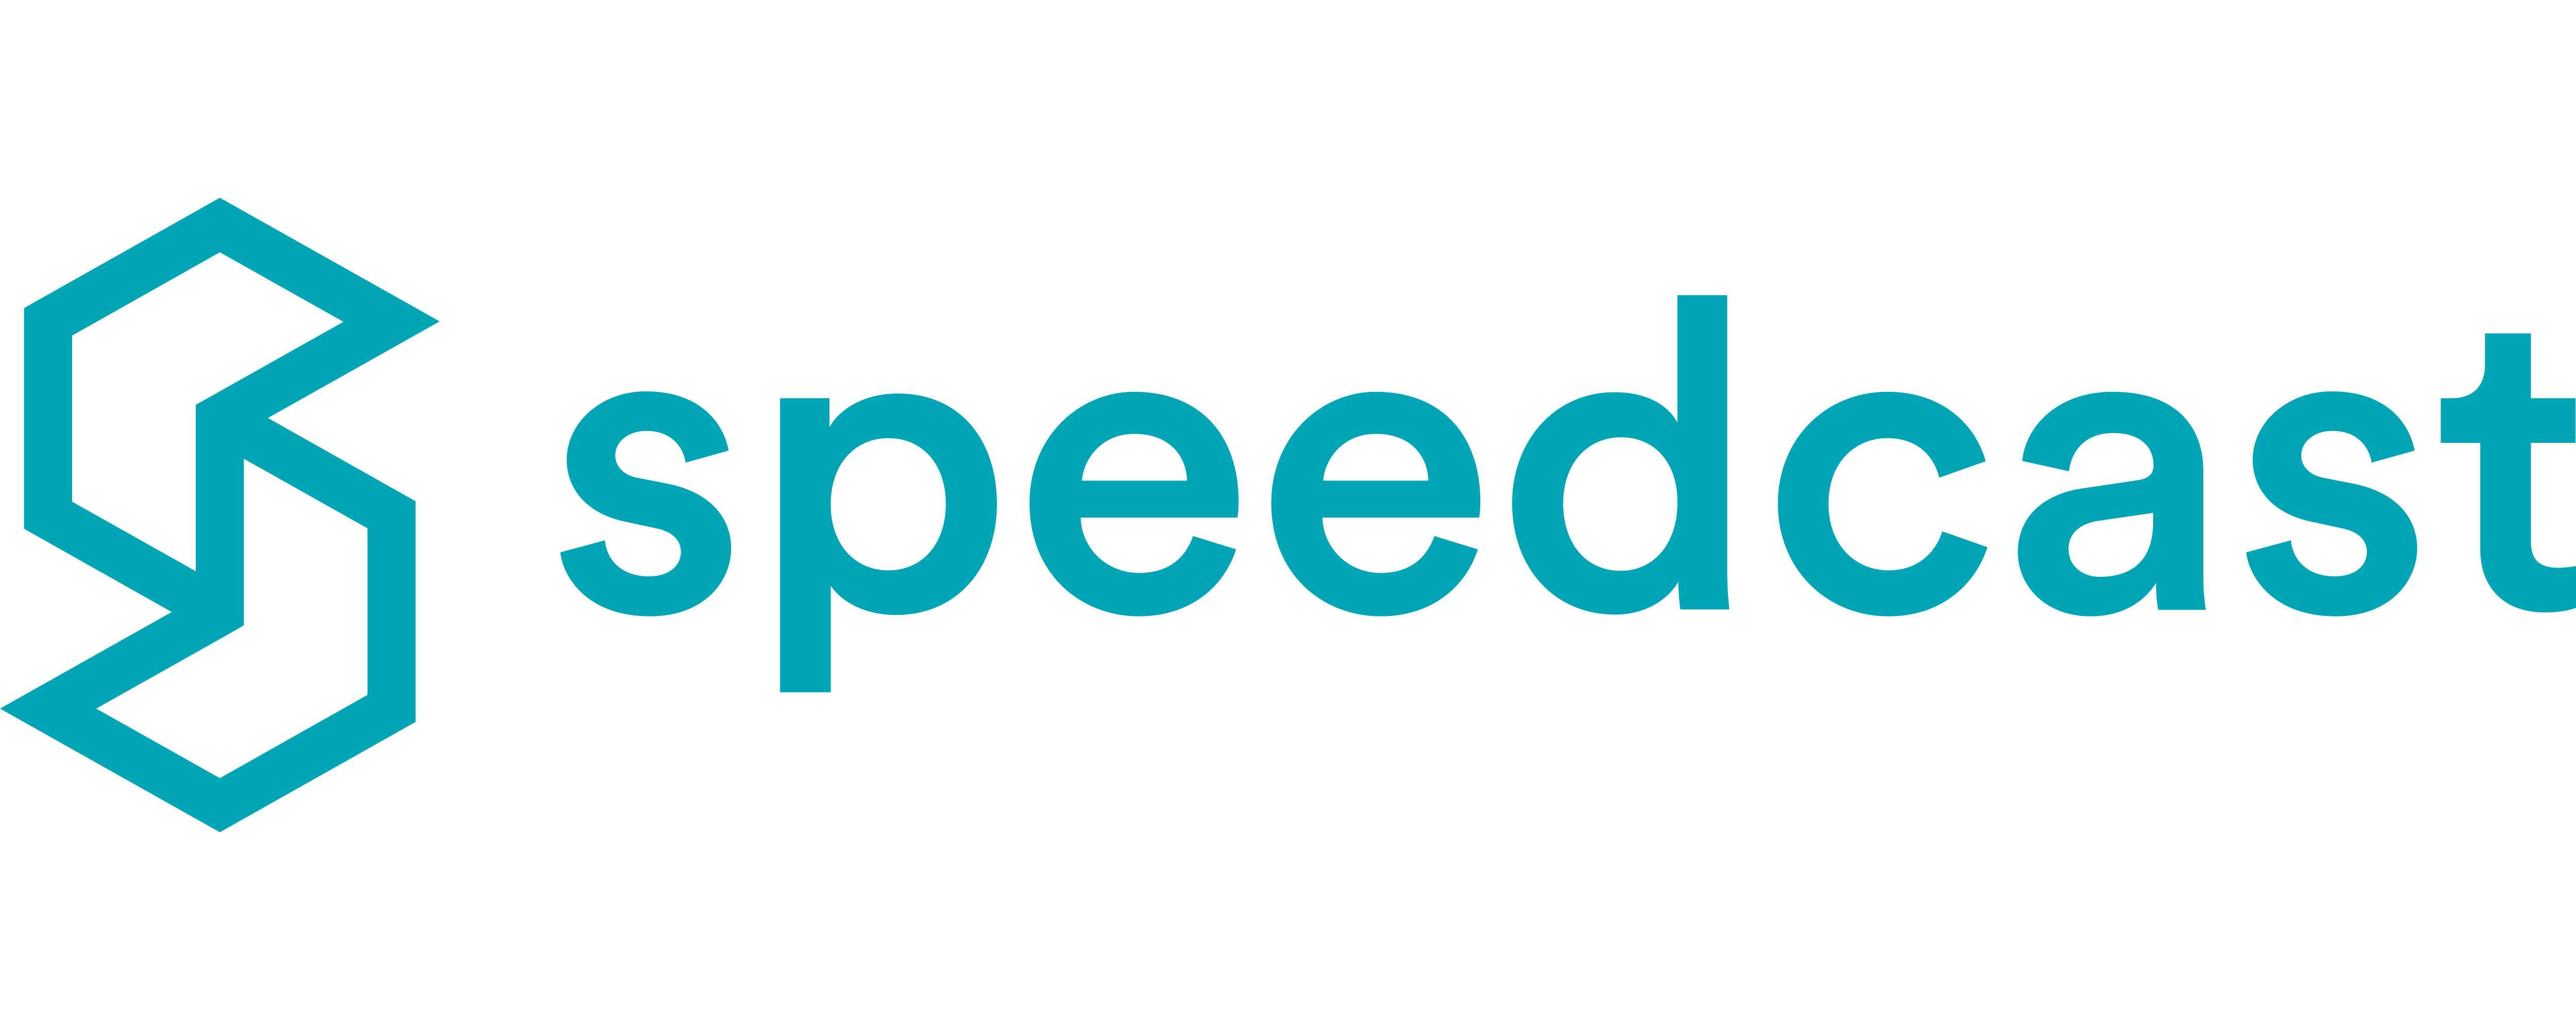 Speedcast logo